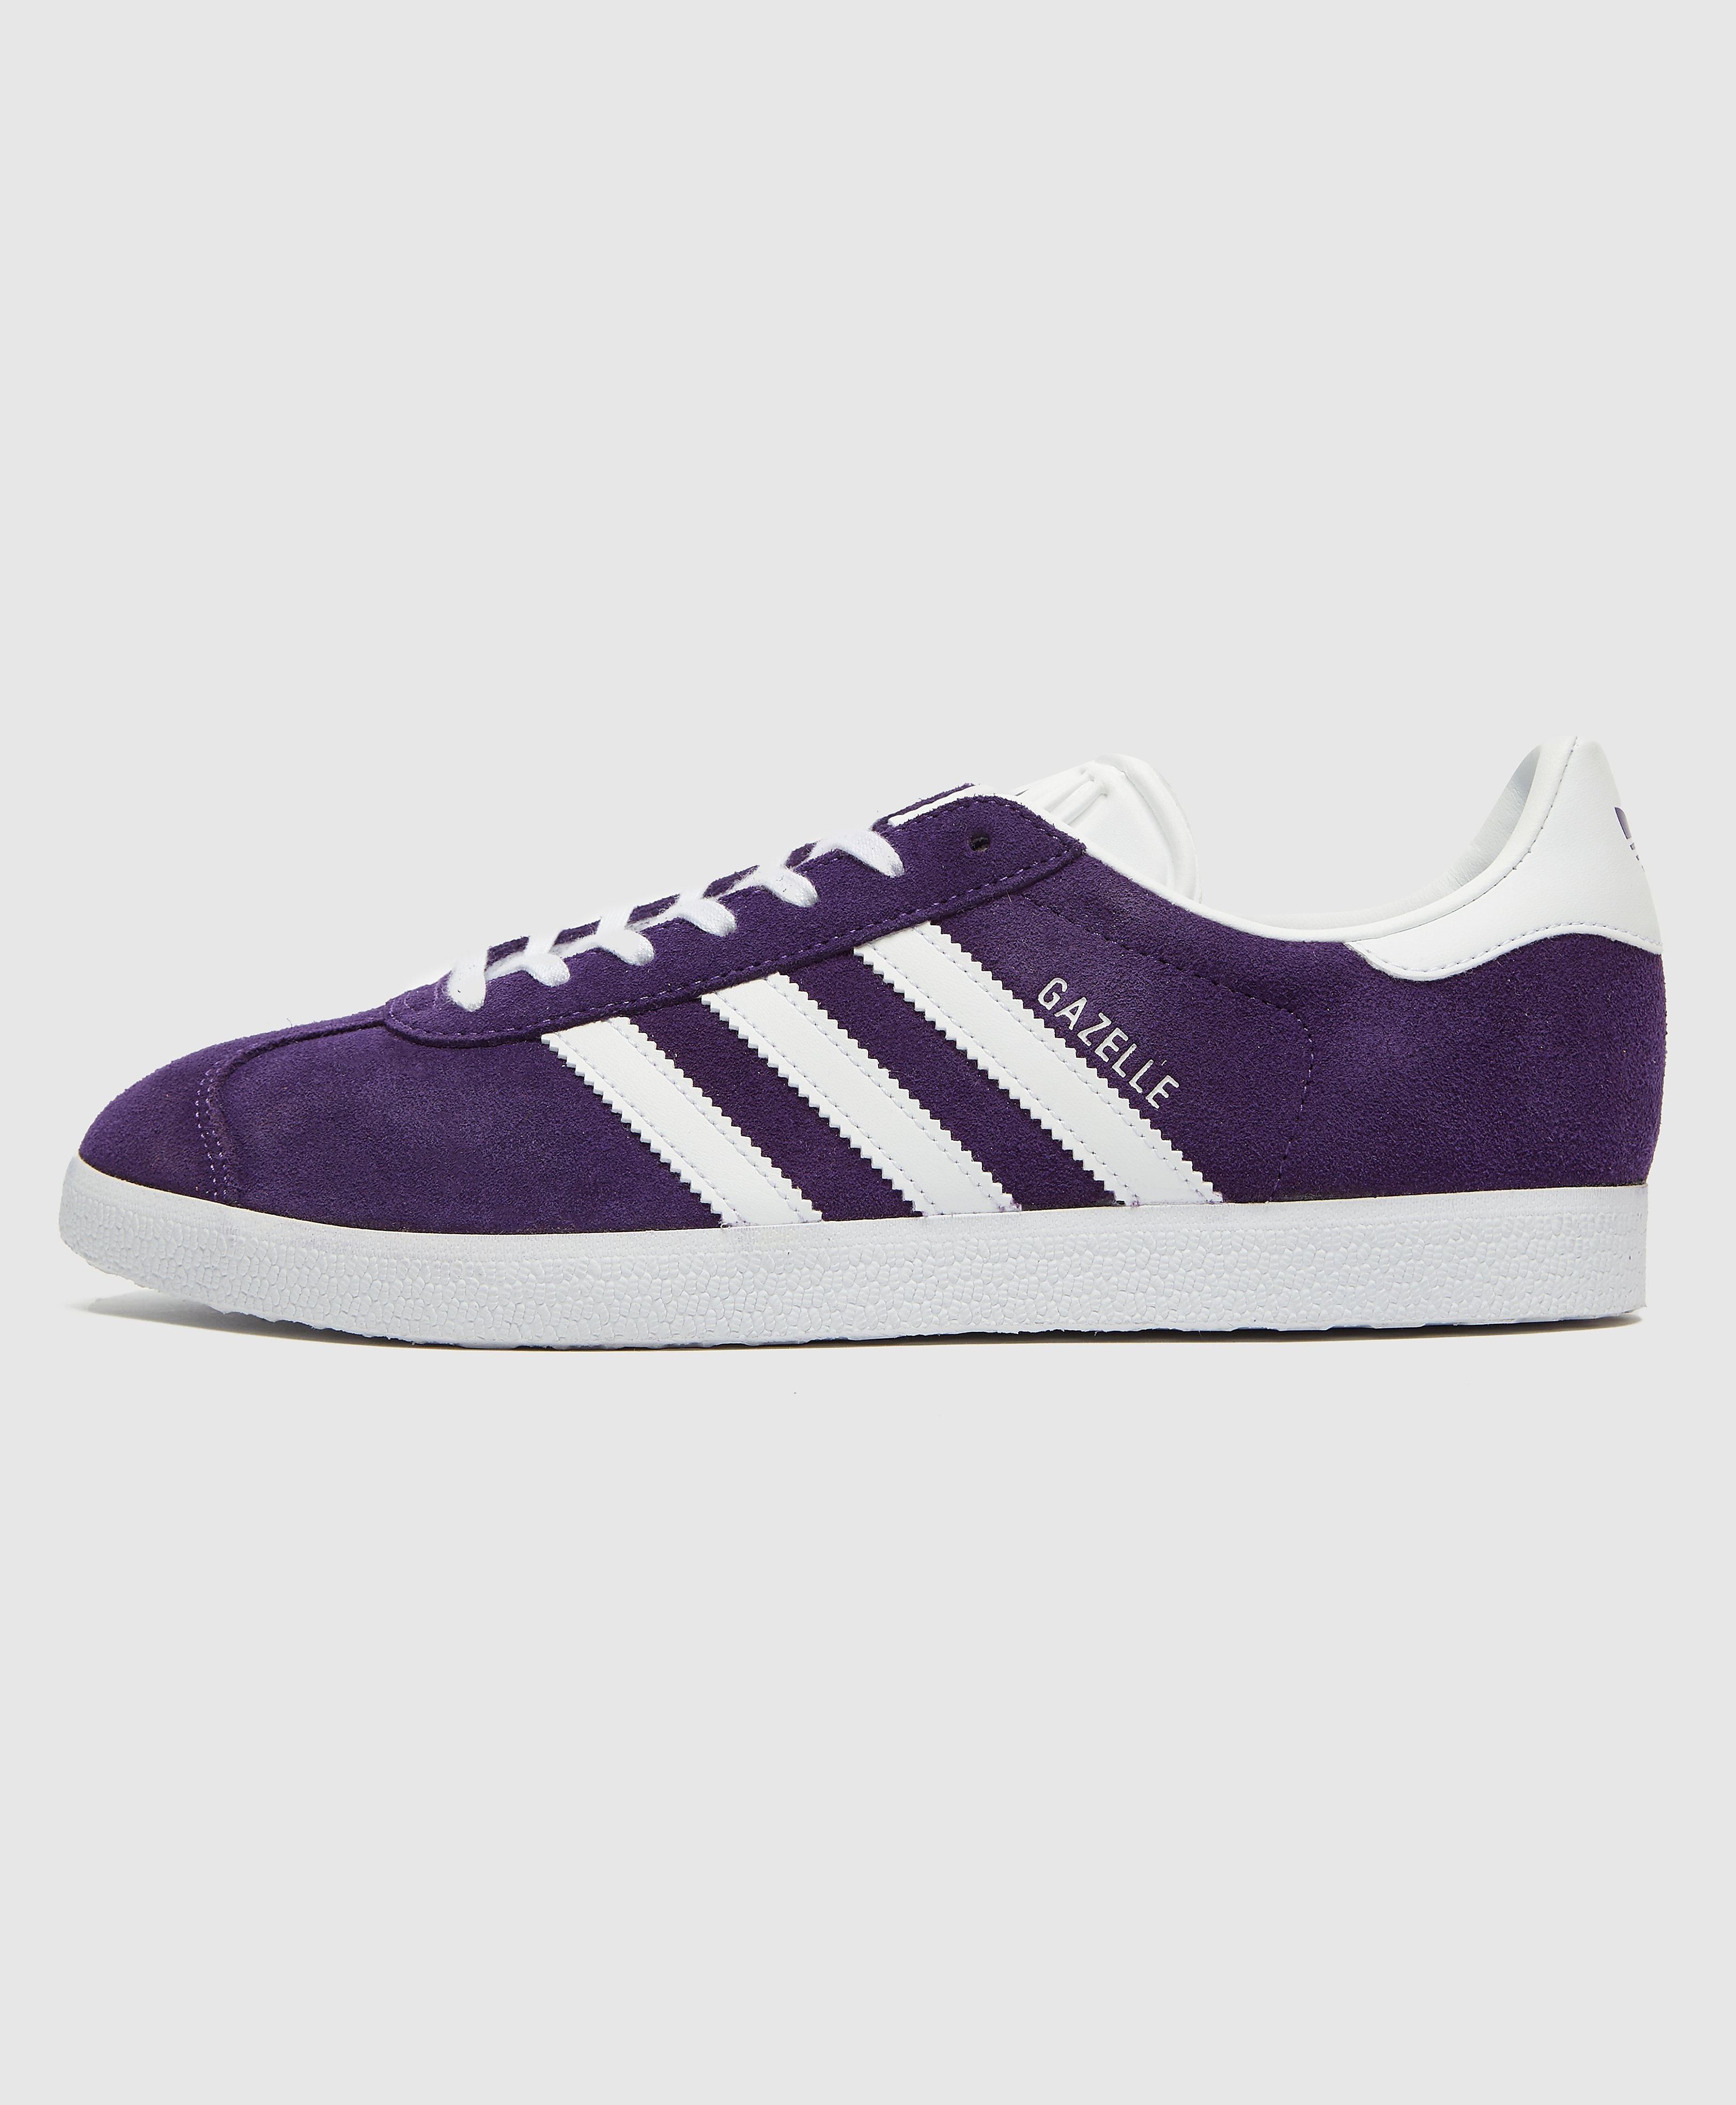 Men's adidas Originals Gazelle Trainers - Purple/White, Purple/White